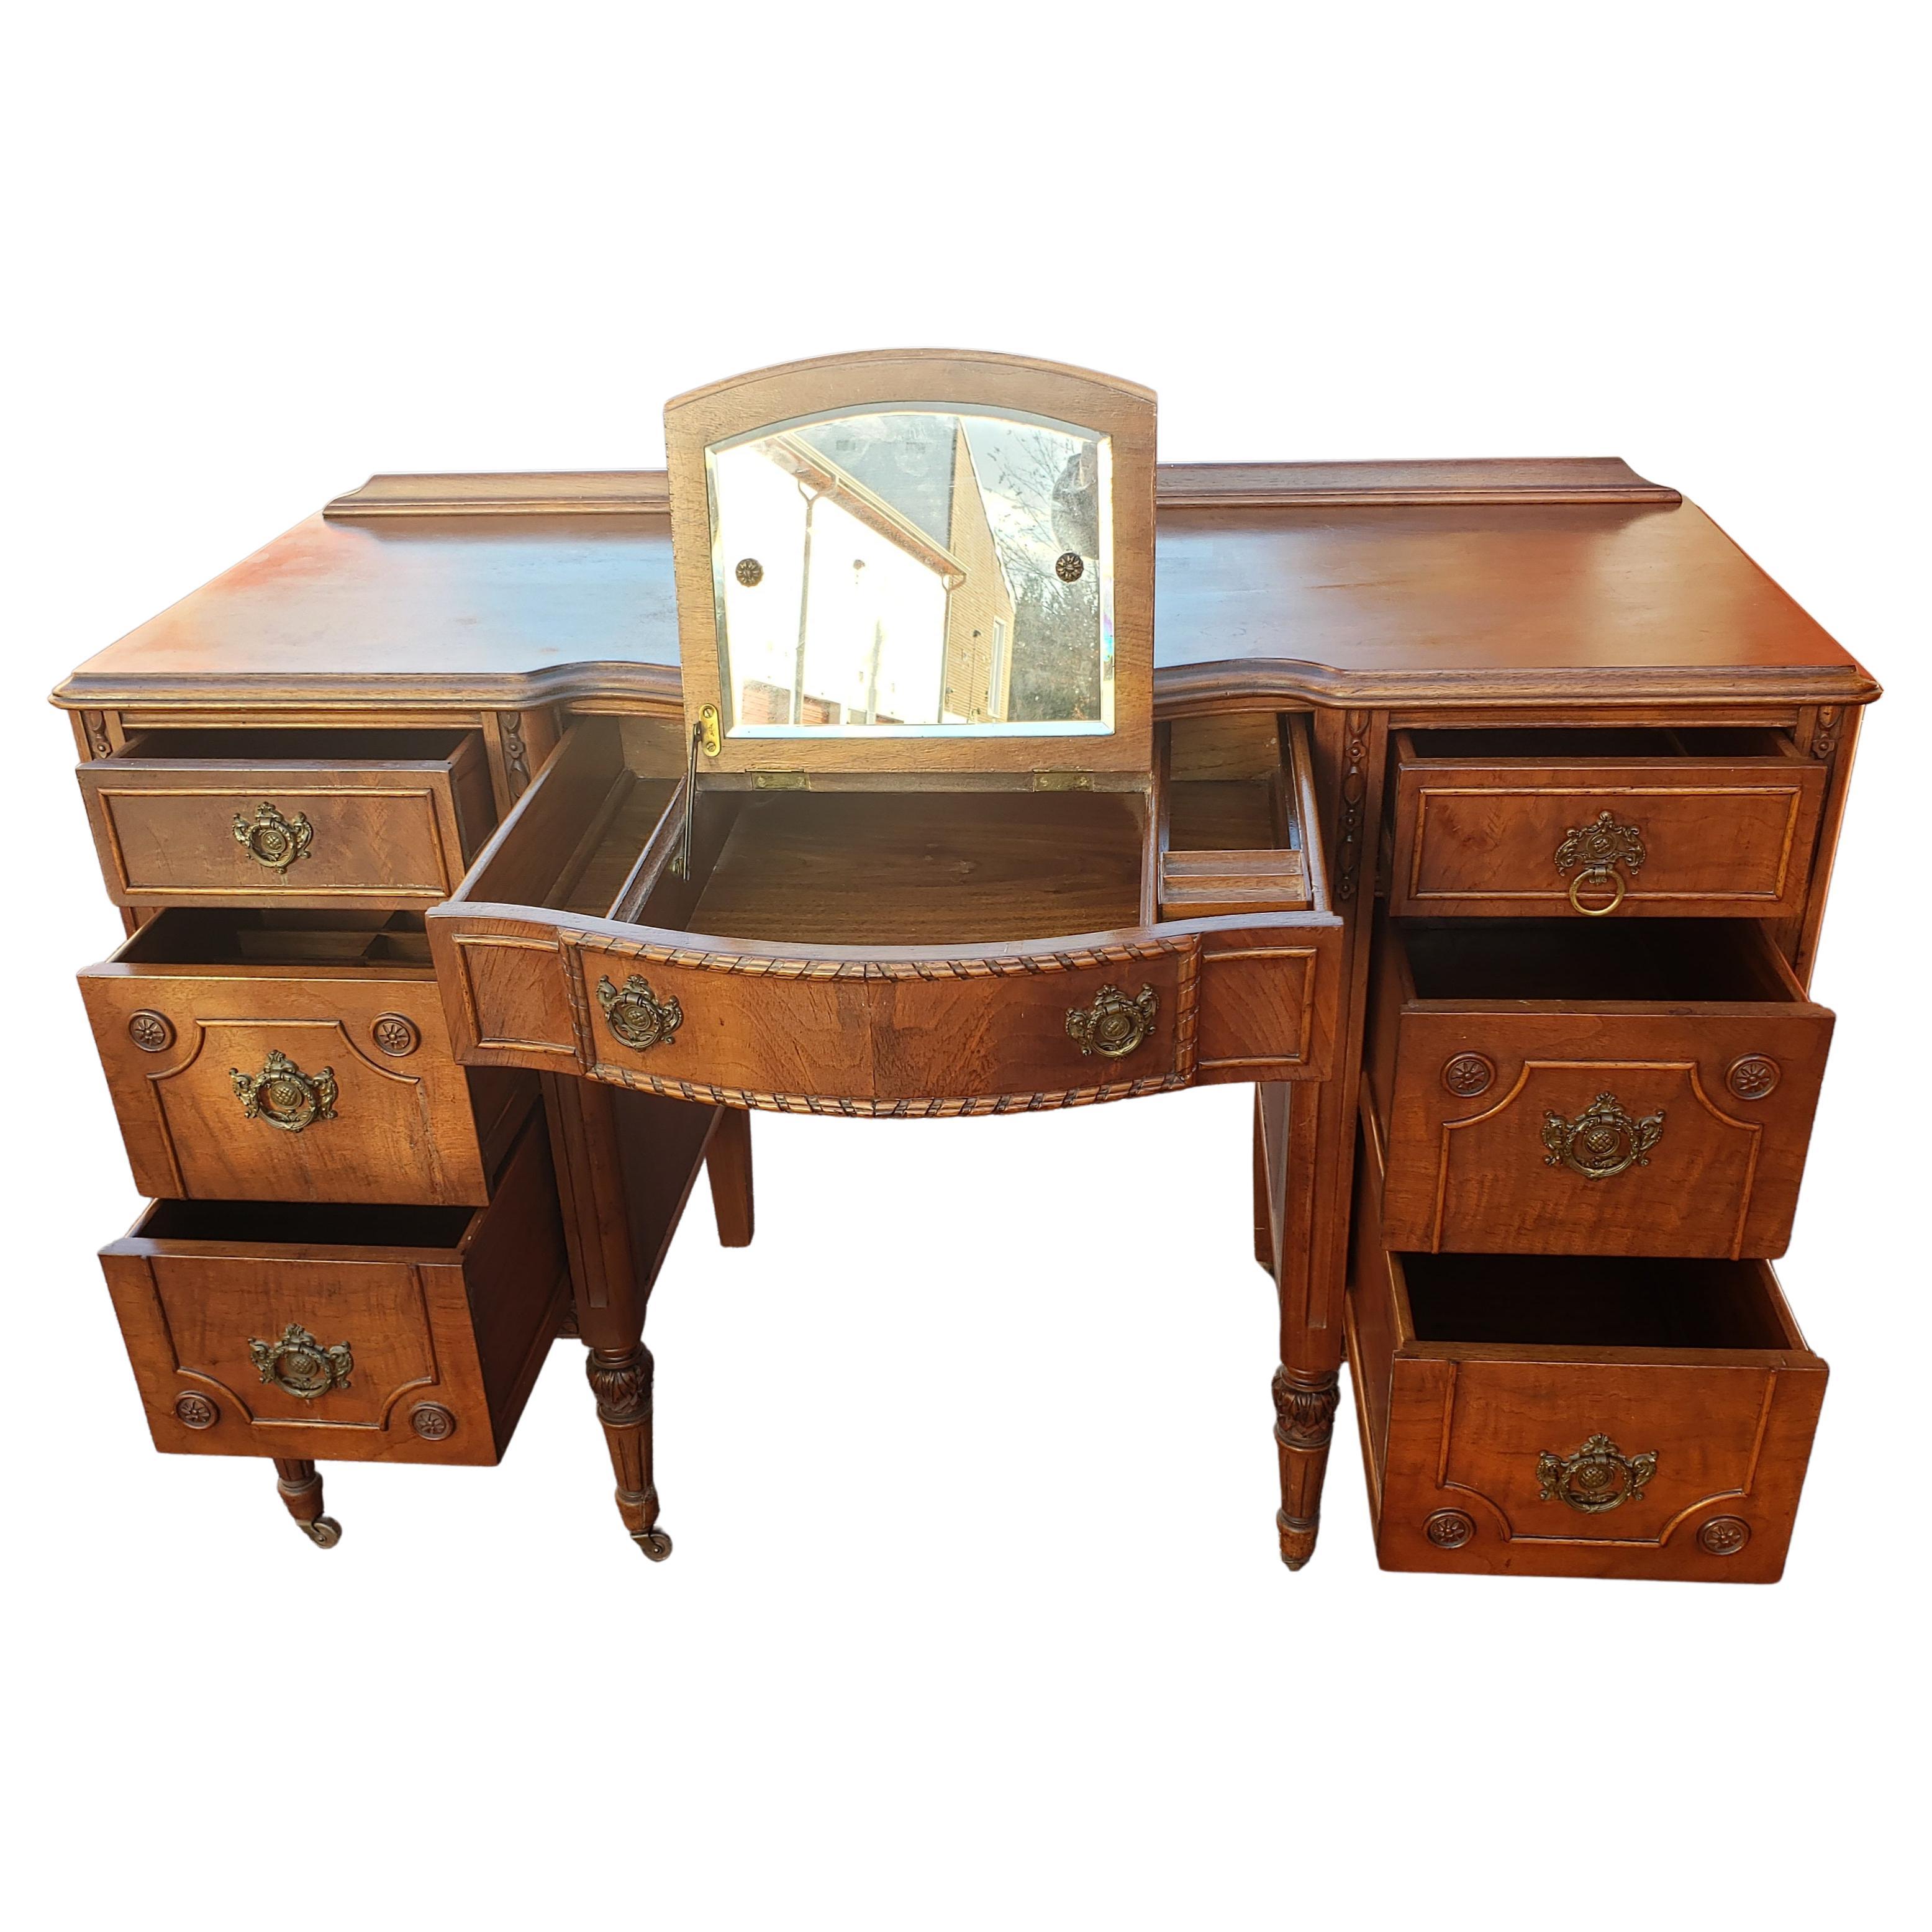 American Phenix Furniture Renaissance Revival Walnut Vanity with Mirrors, Circa 1910s